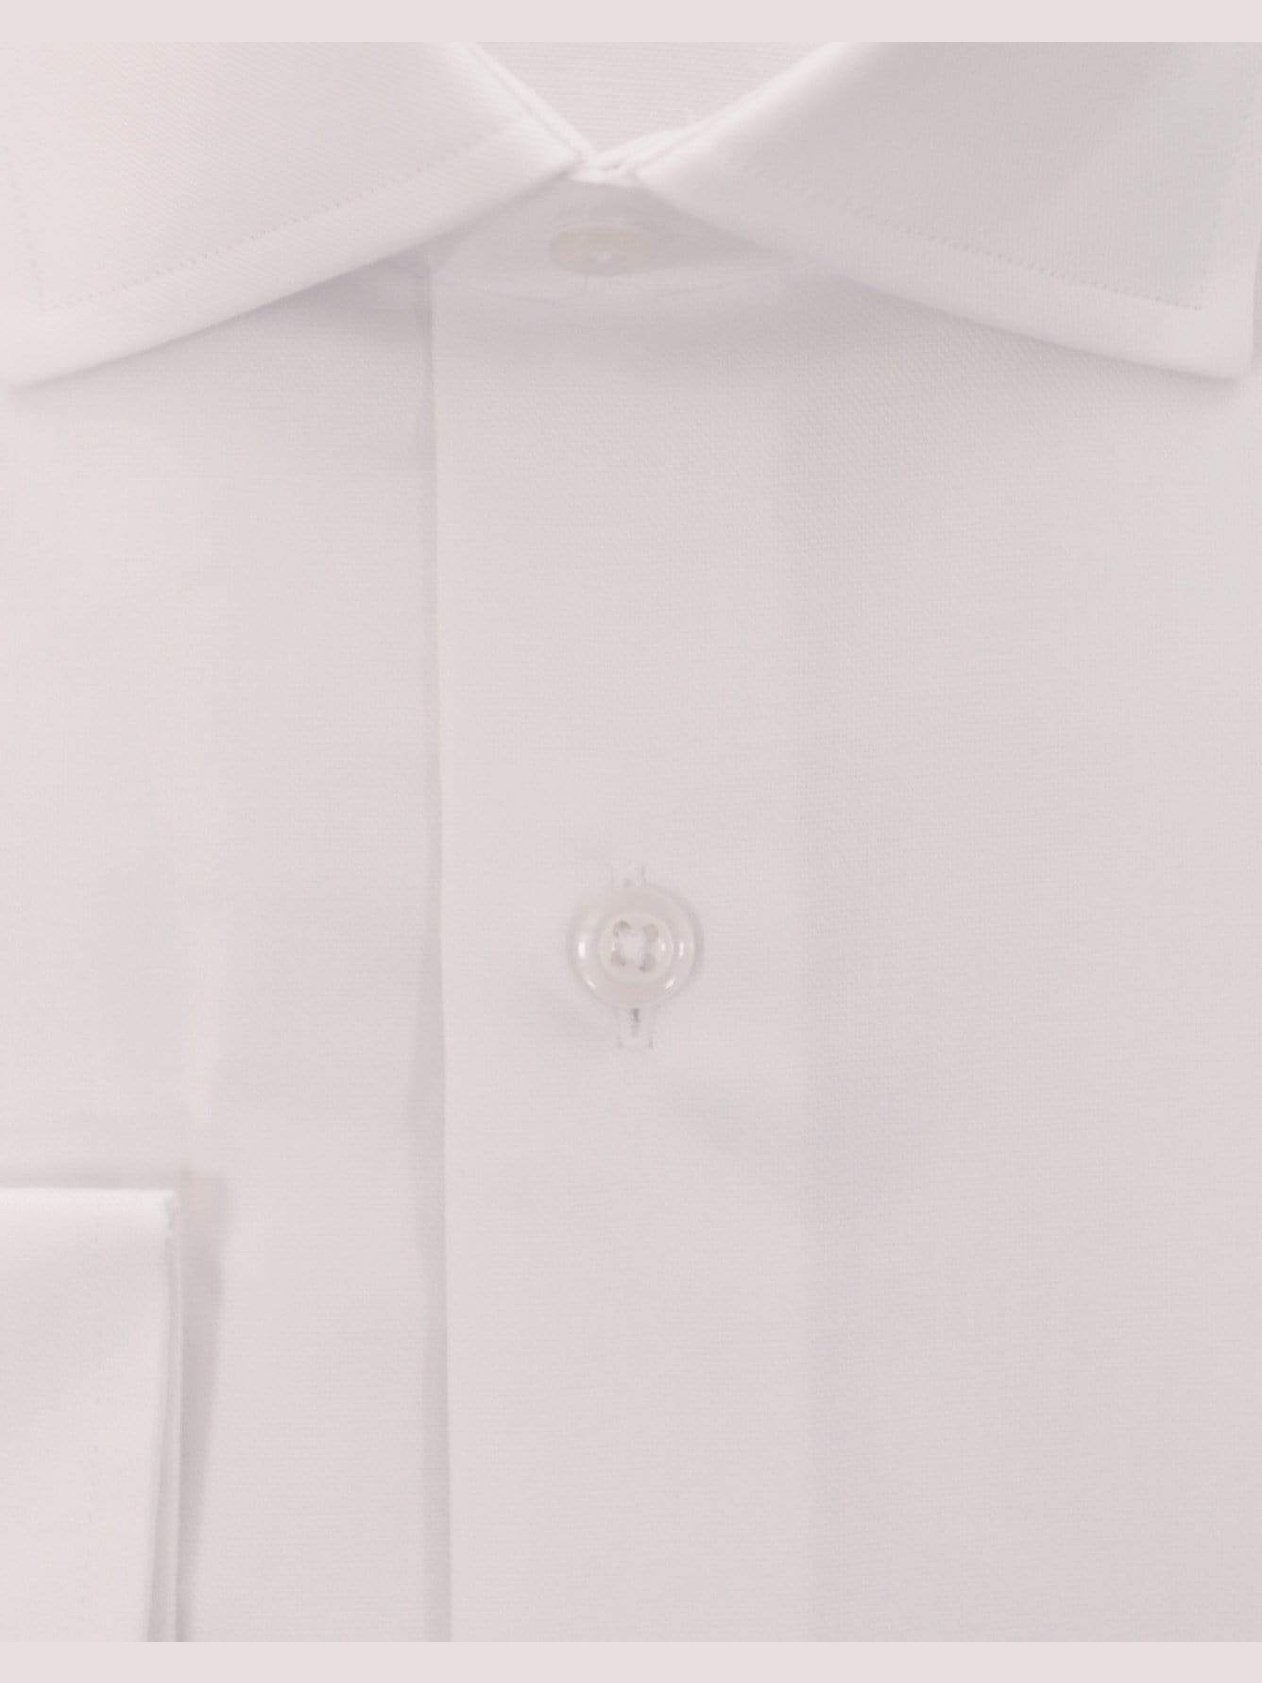 C.L. Shirts SHIRTS Men's Slim Fit Solid White Spread Collar Wrinkle Free 100% Cotton Dress Shirt